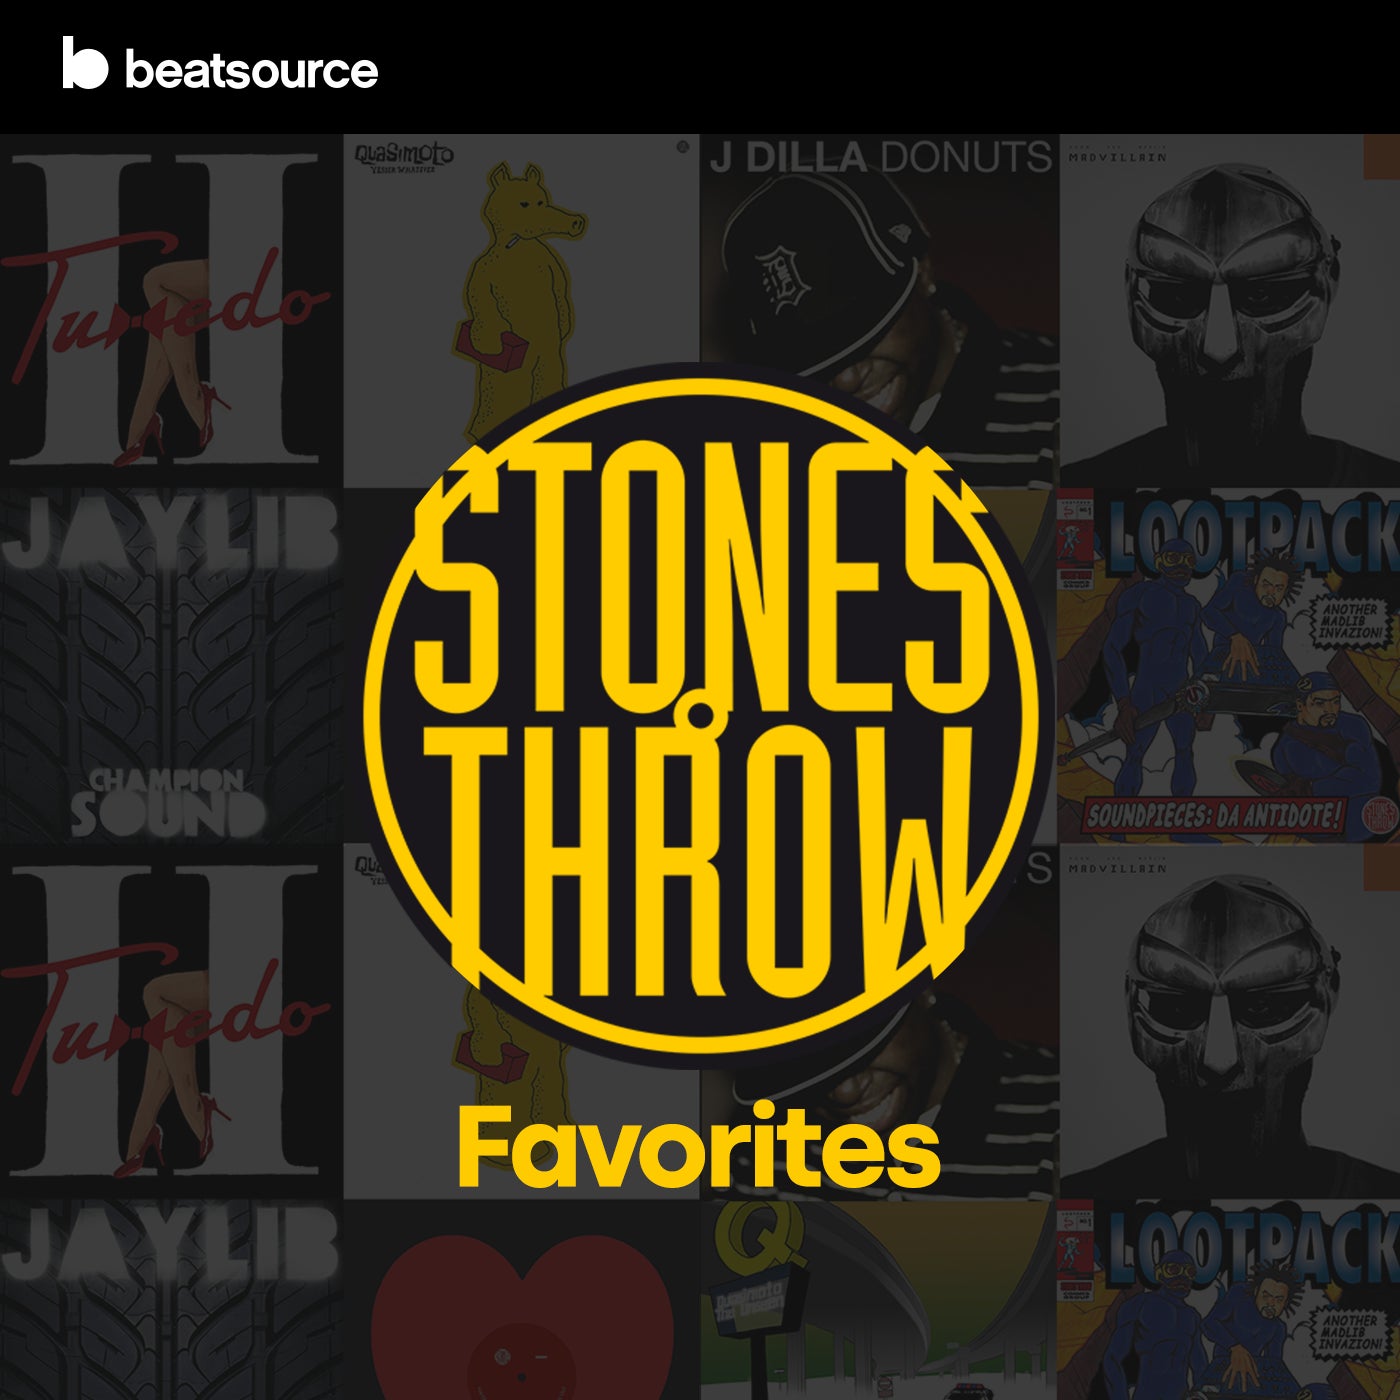 Stones Throw Favorites by Beatsource